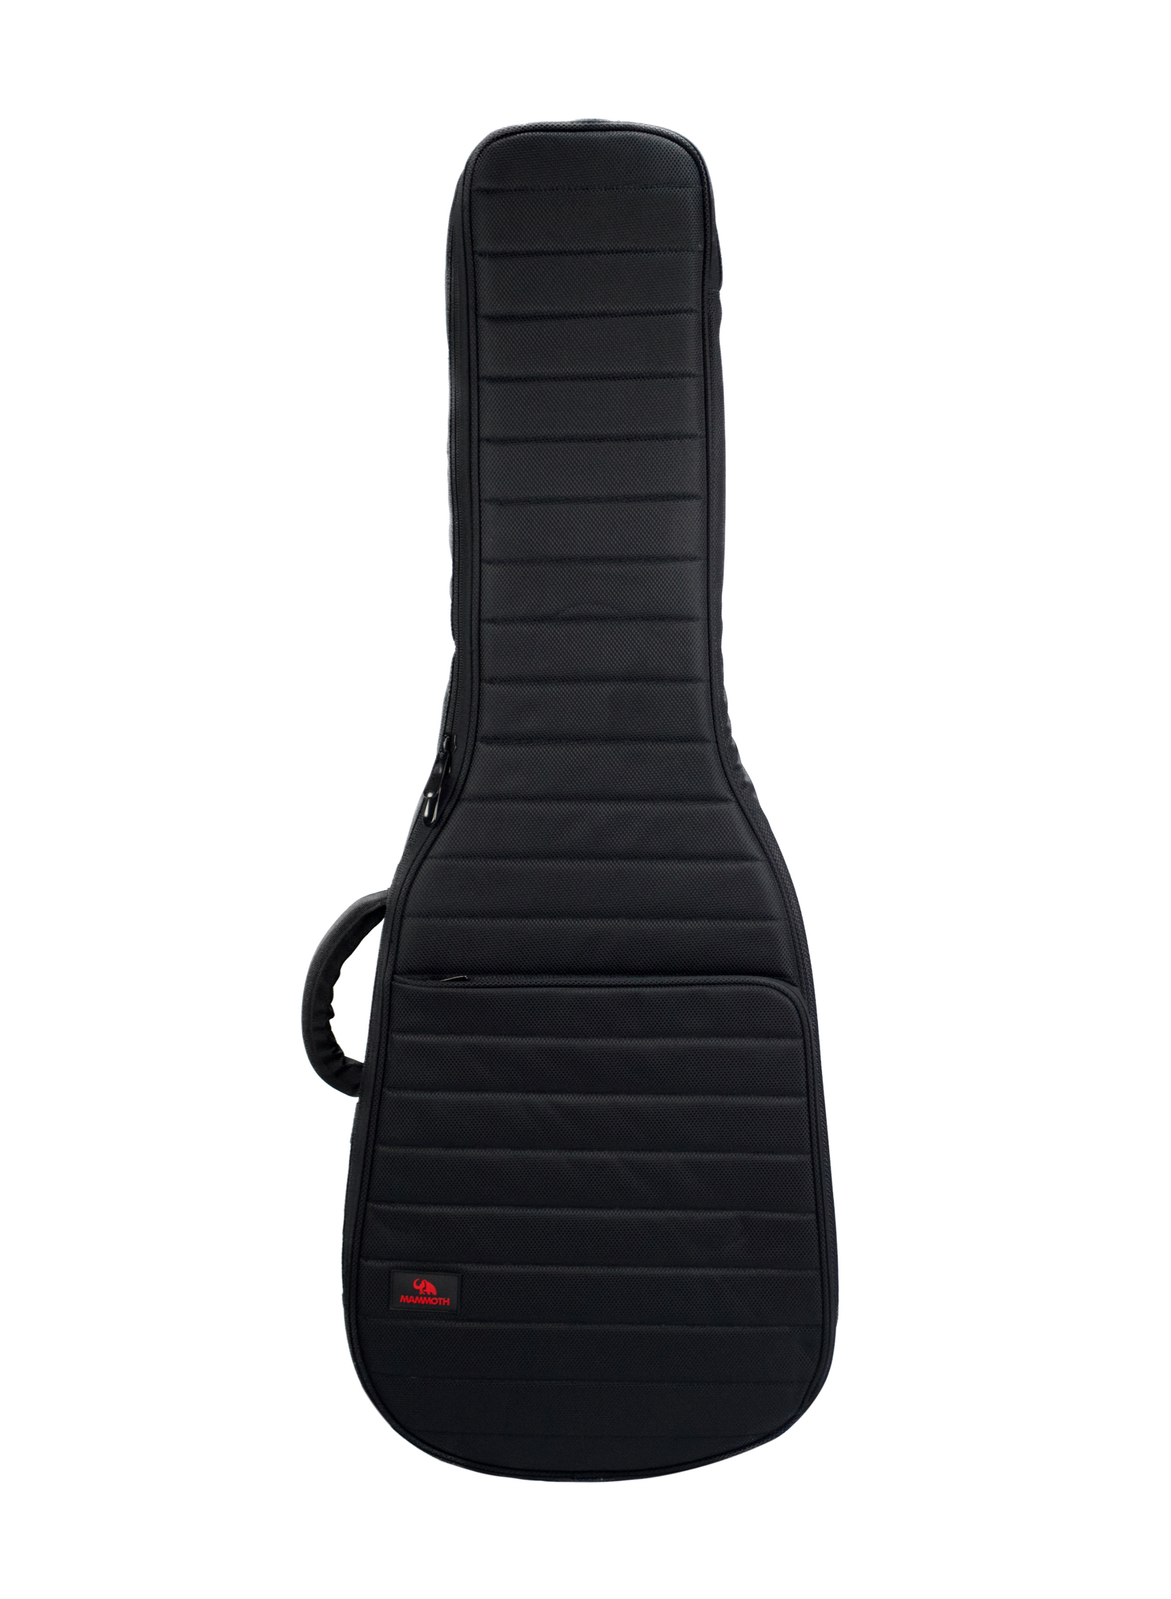 Mammoth Royal G | Luxury Premium Electric Guitar Gig Bag